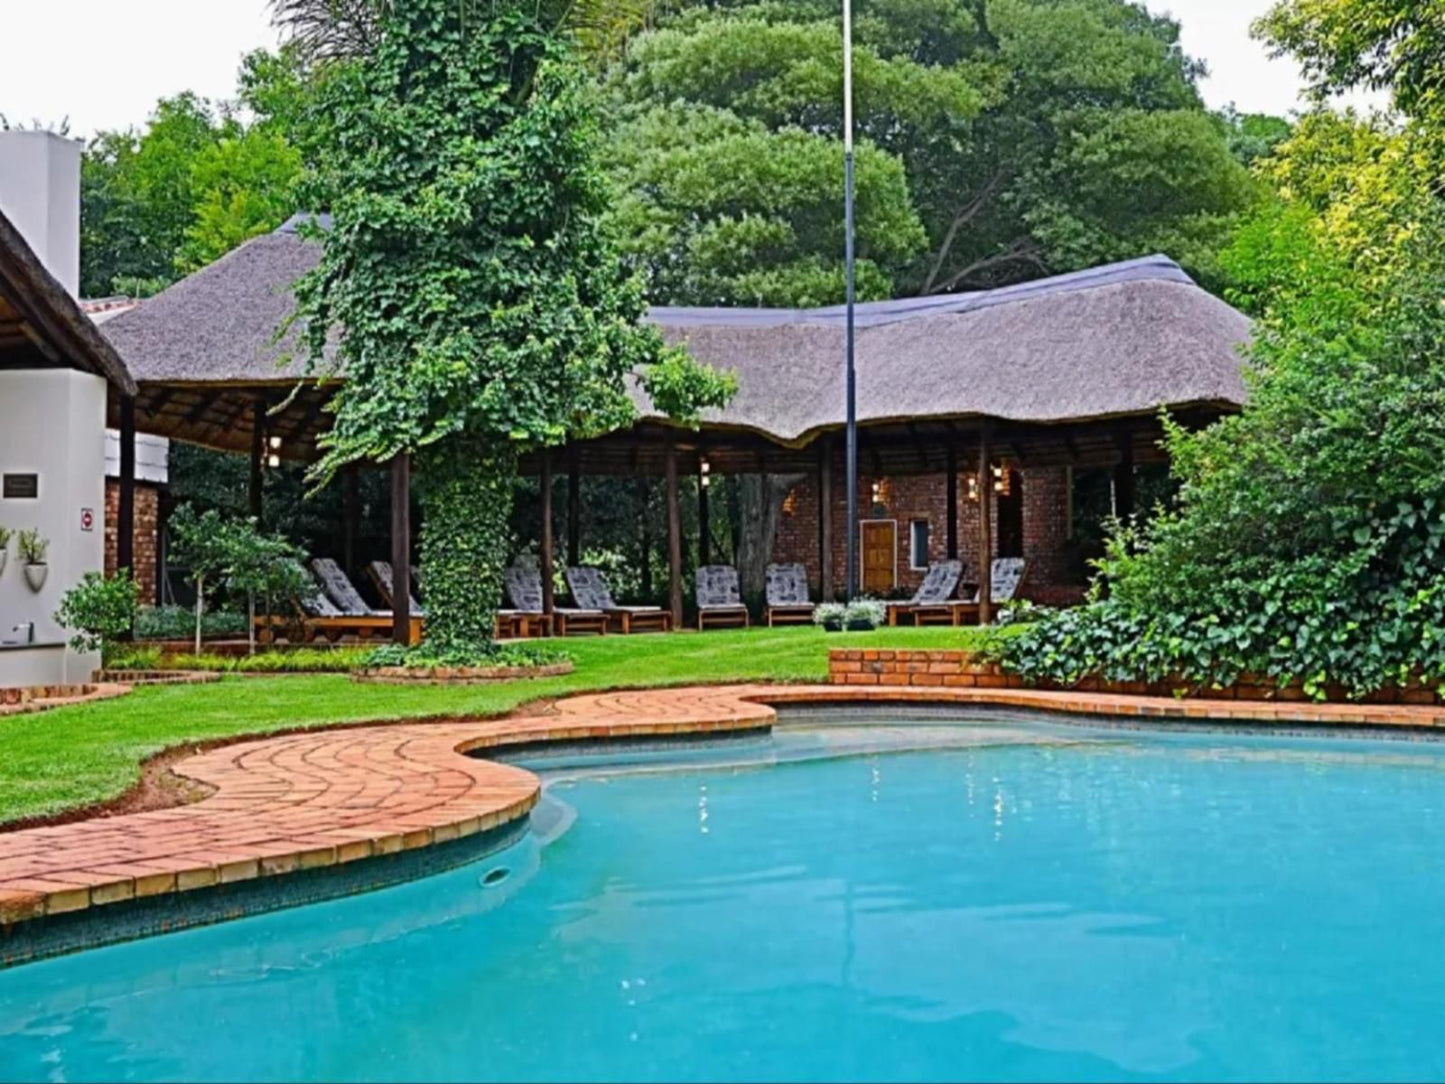 Andante Lodge Elardus Park Pretoria Tshwane Gauteng South Africa Complementary Colors, Swimming Pool